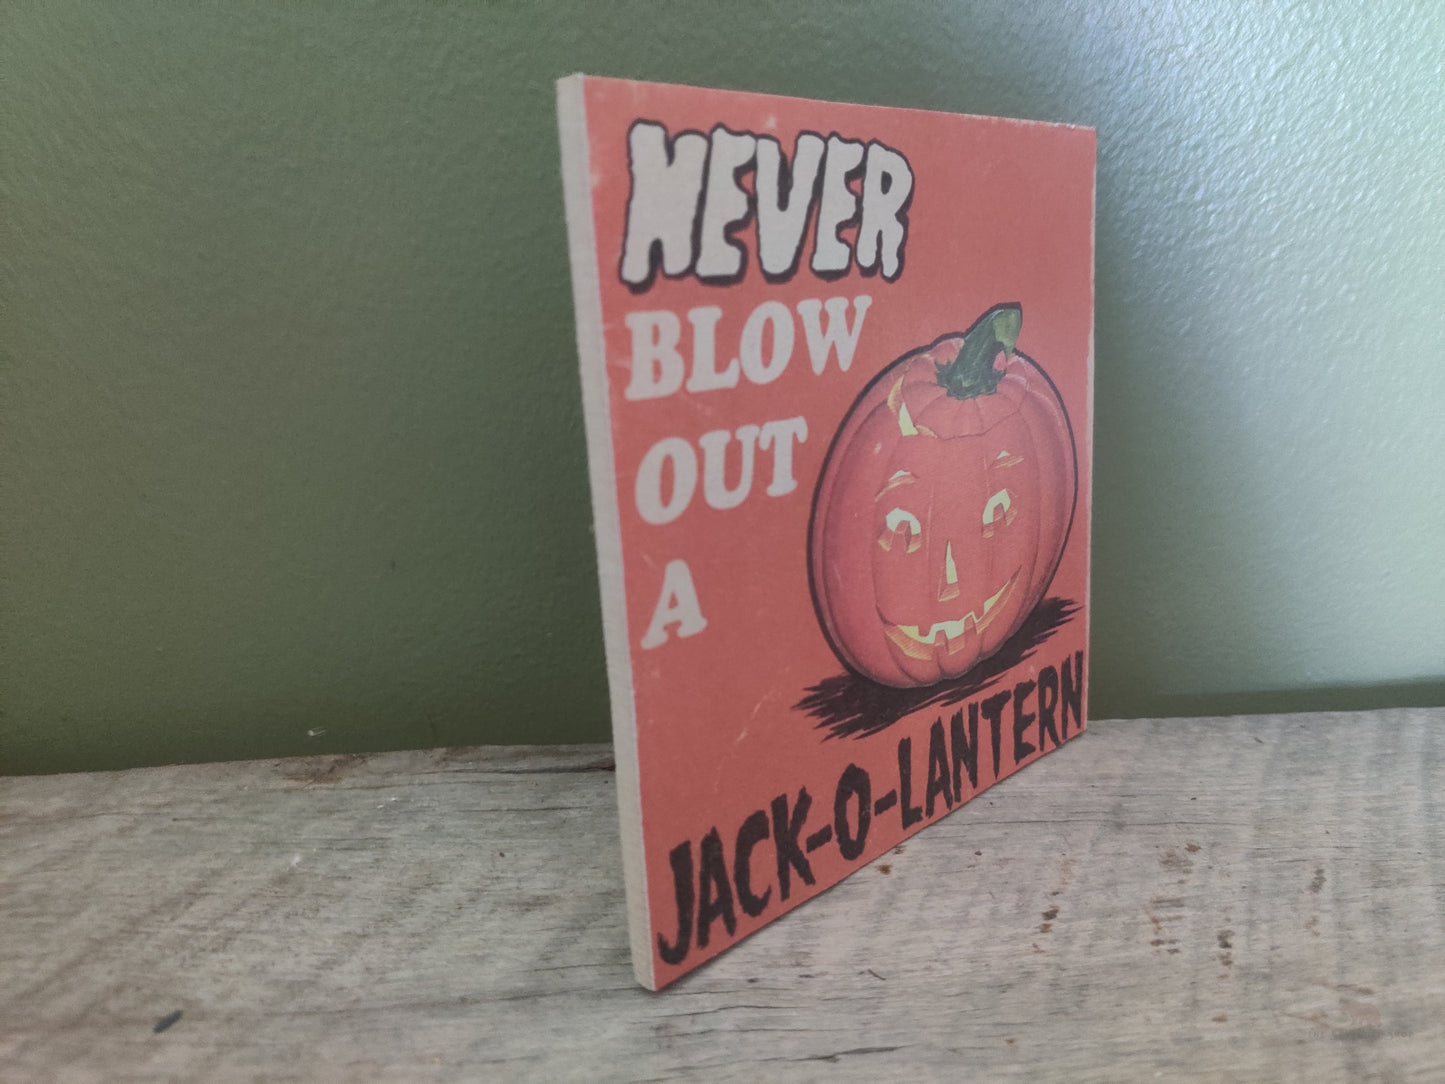 Never Blow Out A Jack O Lantern Halloween Wood Cutout